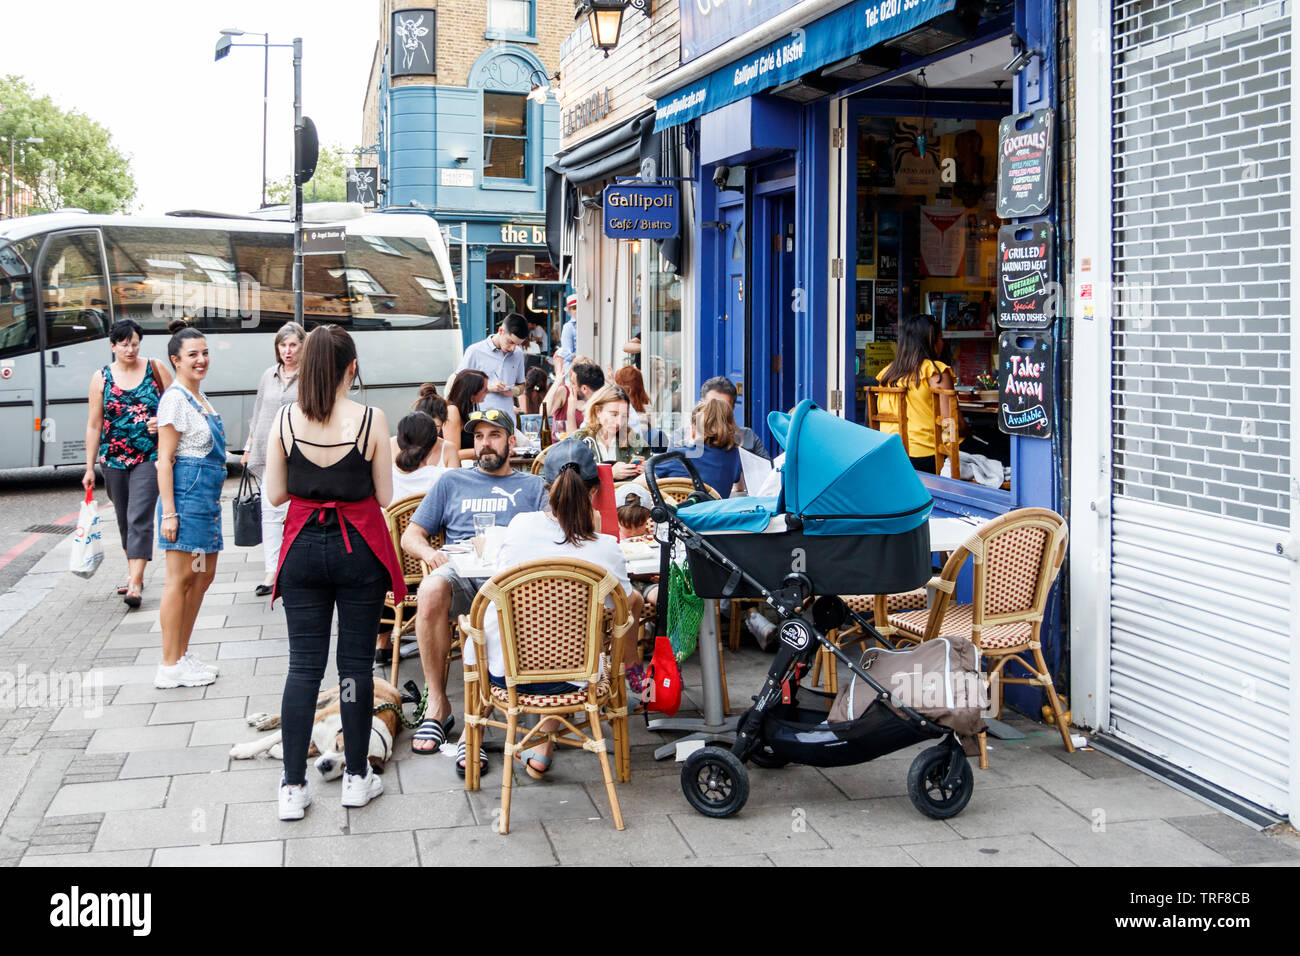 Alfresco diners outside the Gallipoli bistro on Upper Street, London, UK Stock Photo